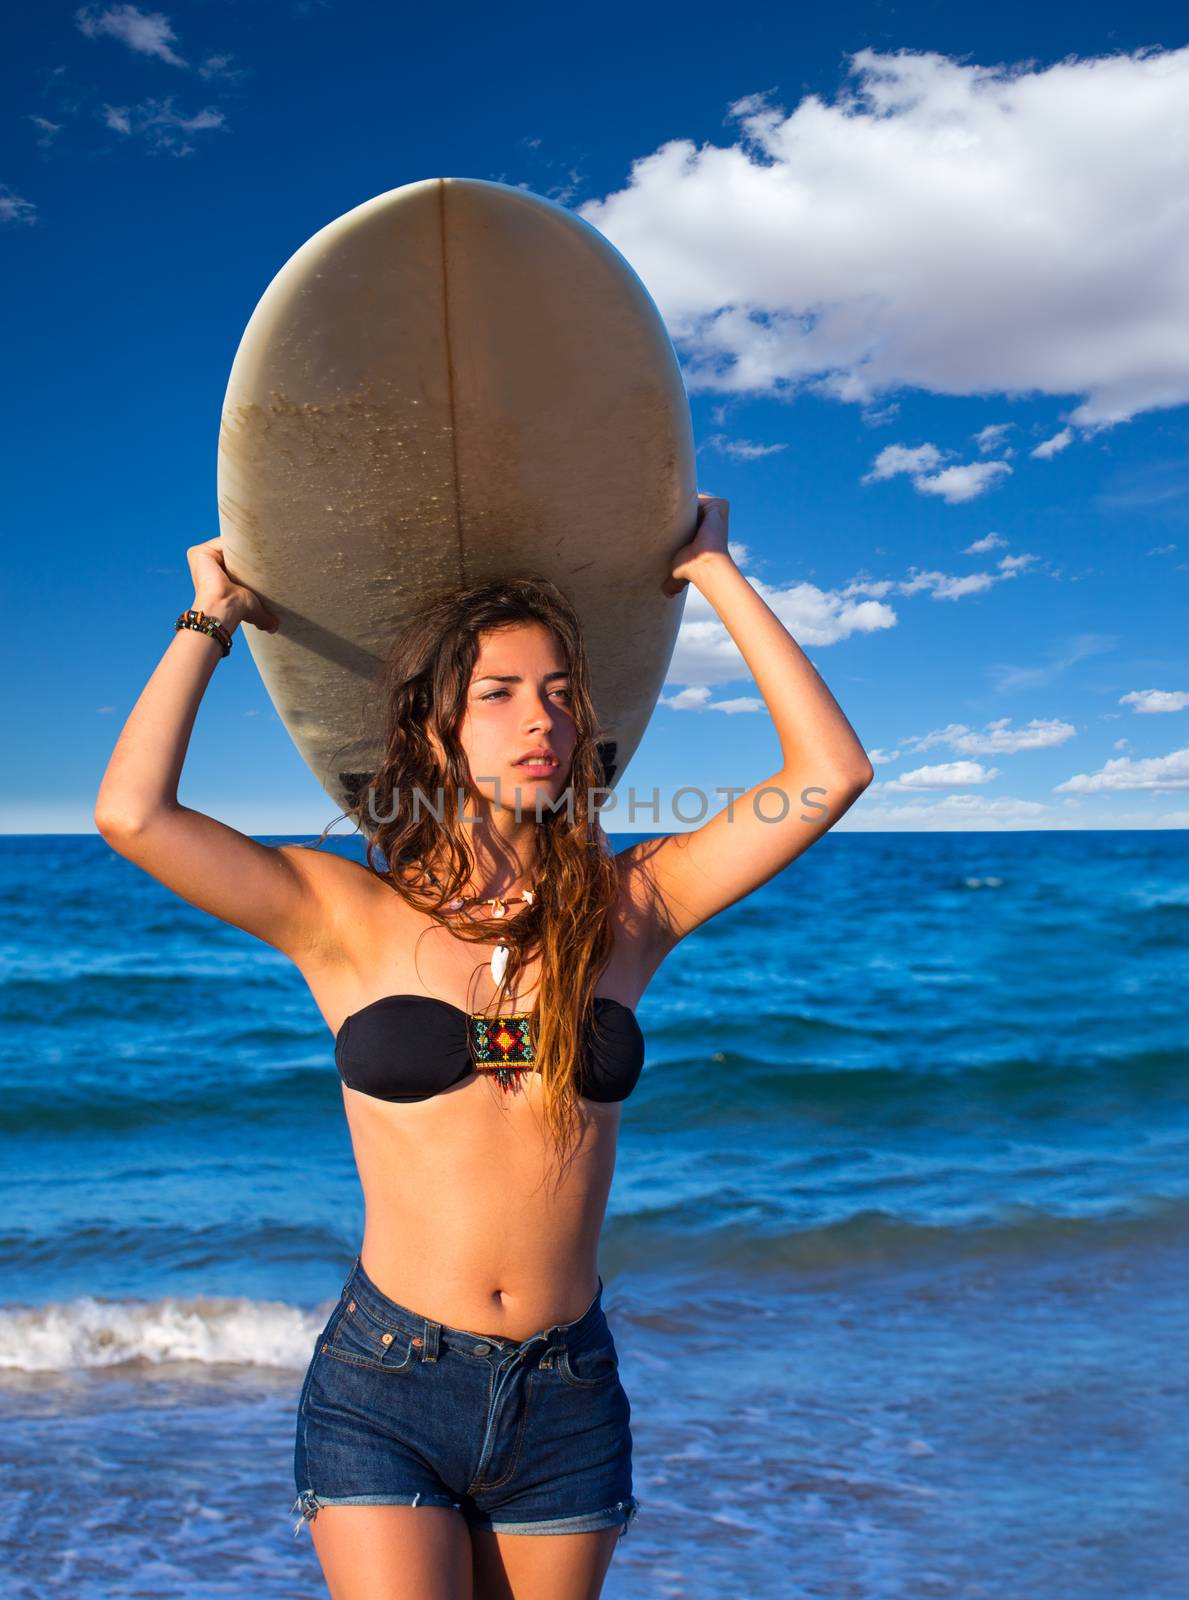 Brunette surfer teen girl holding surfboard in blue beach